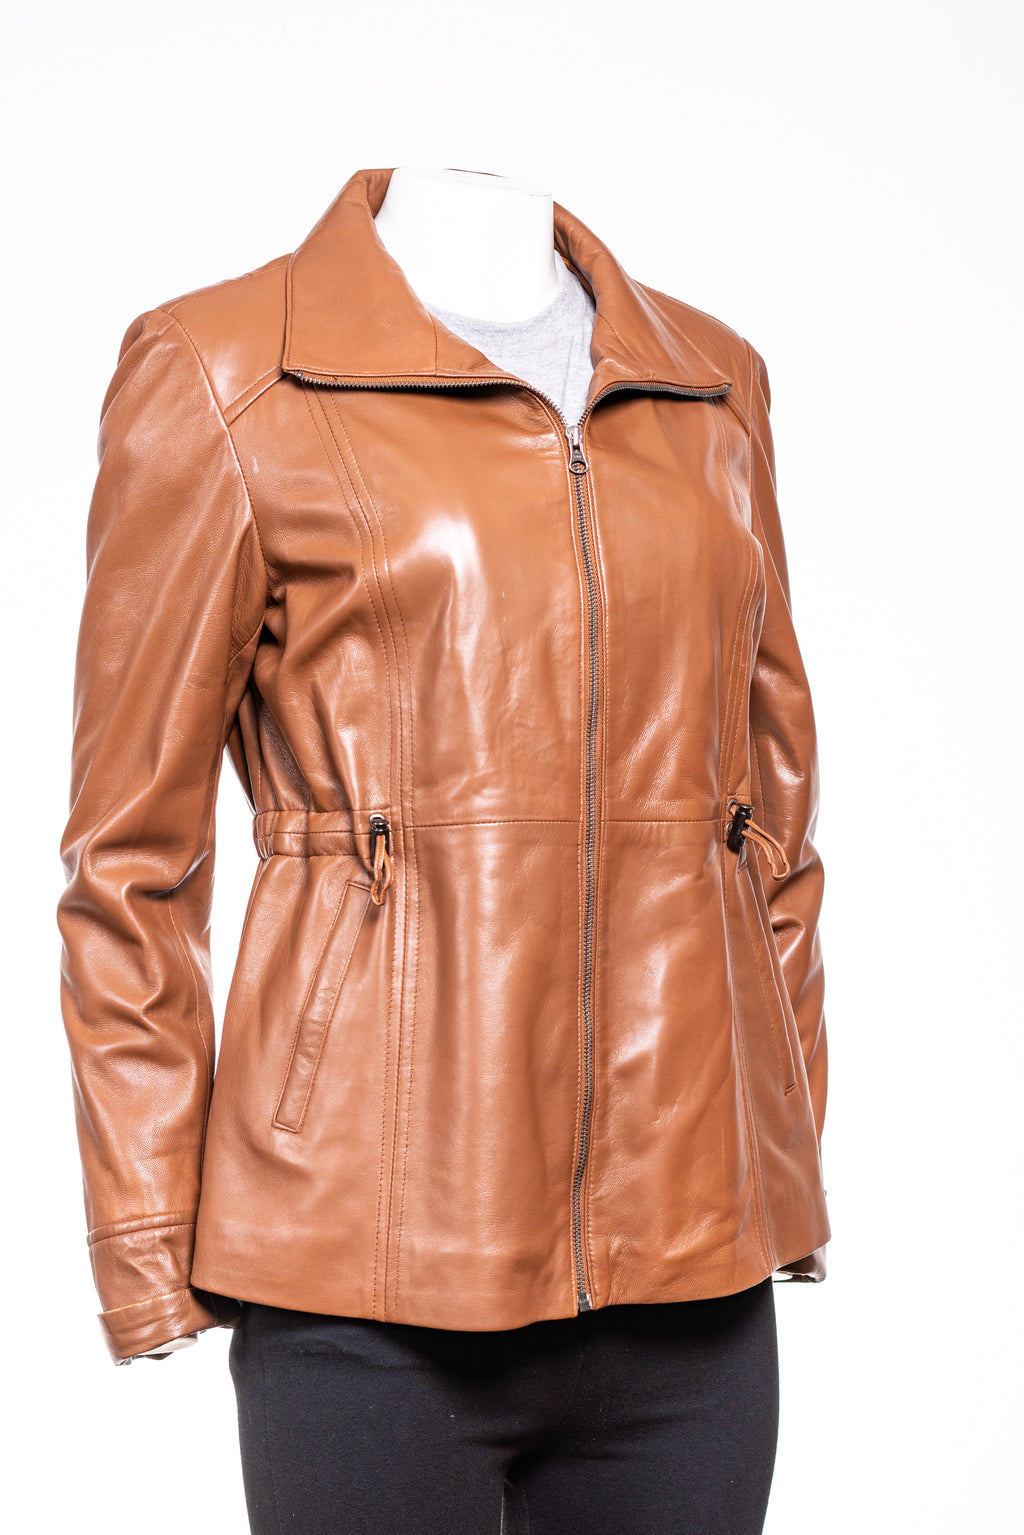 Ladies Plus Size Tan Black Hip Length Toggle Waist Leather Jacket: Berta